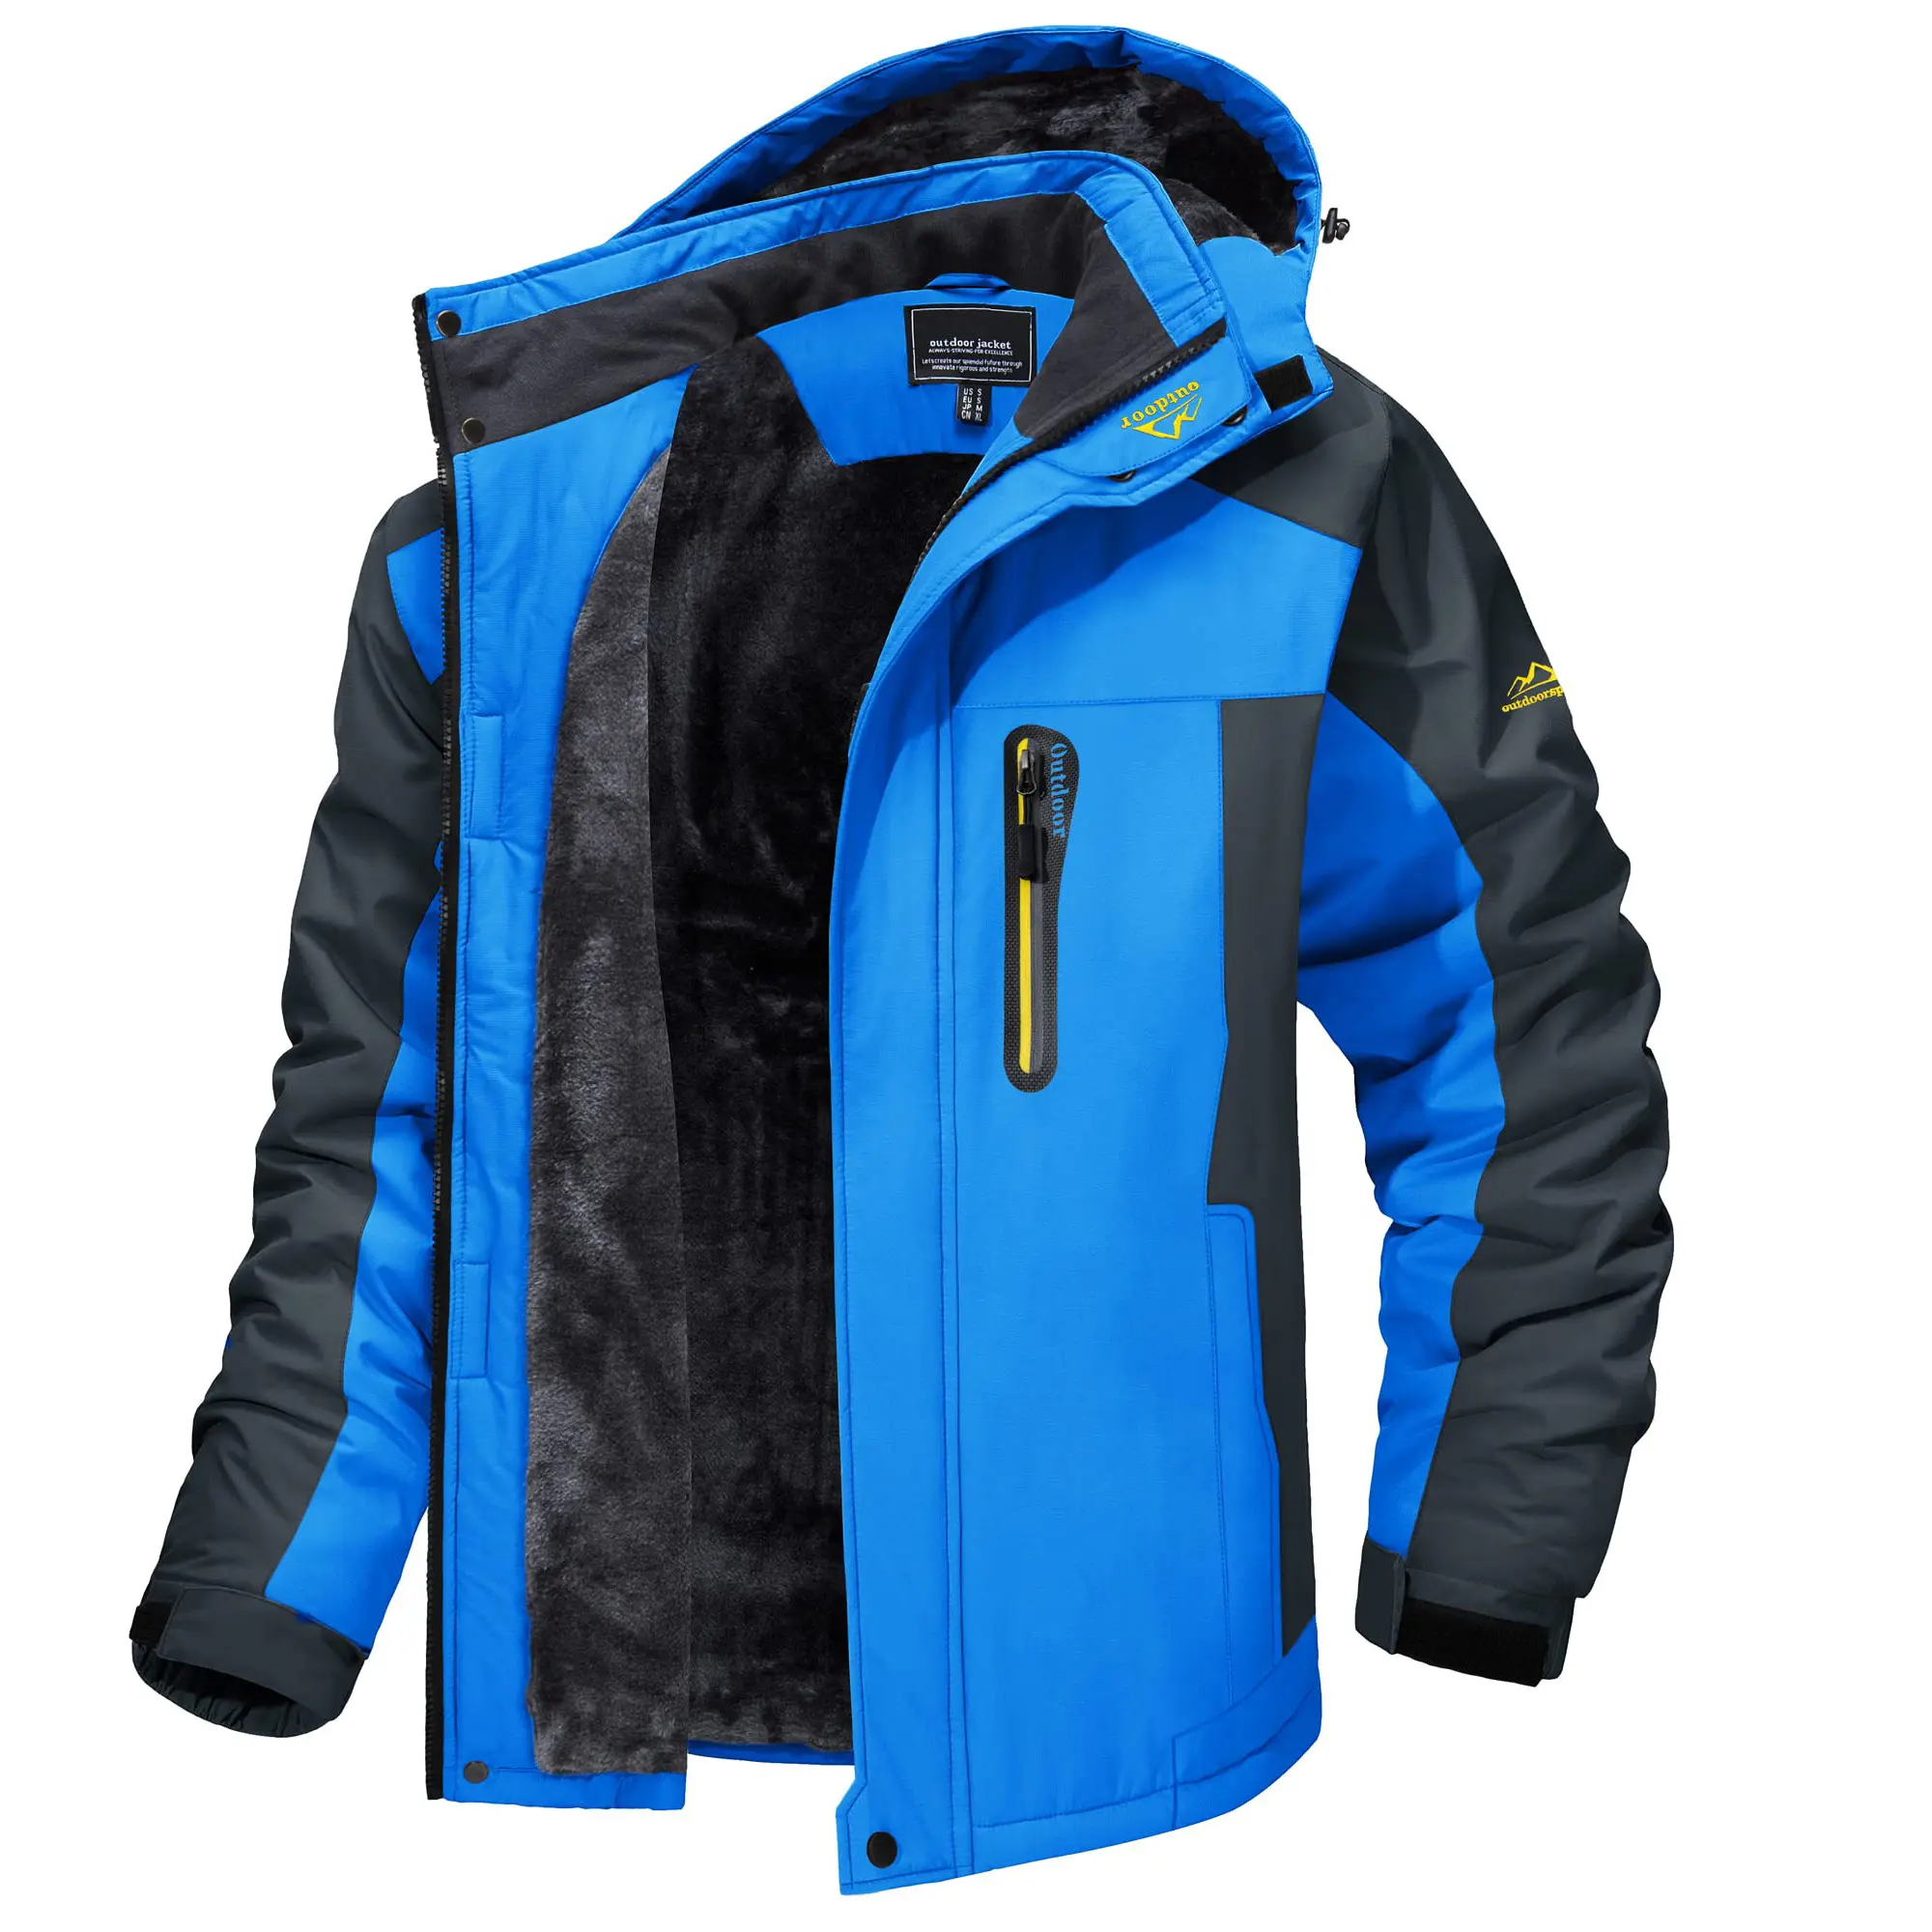 Men's Winter Ski Jacket Waterproof Windbreaker Snowboarding Climbing Camping Warm Fleece Heating Outdoor Hiking Coat Outfit